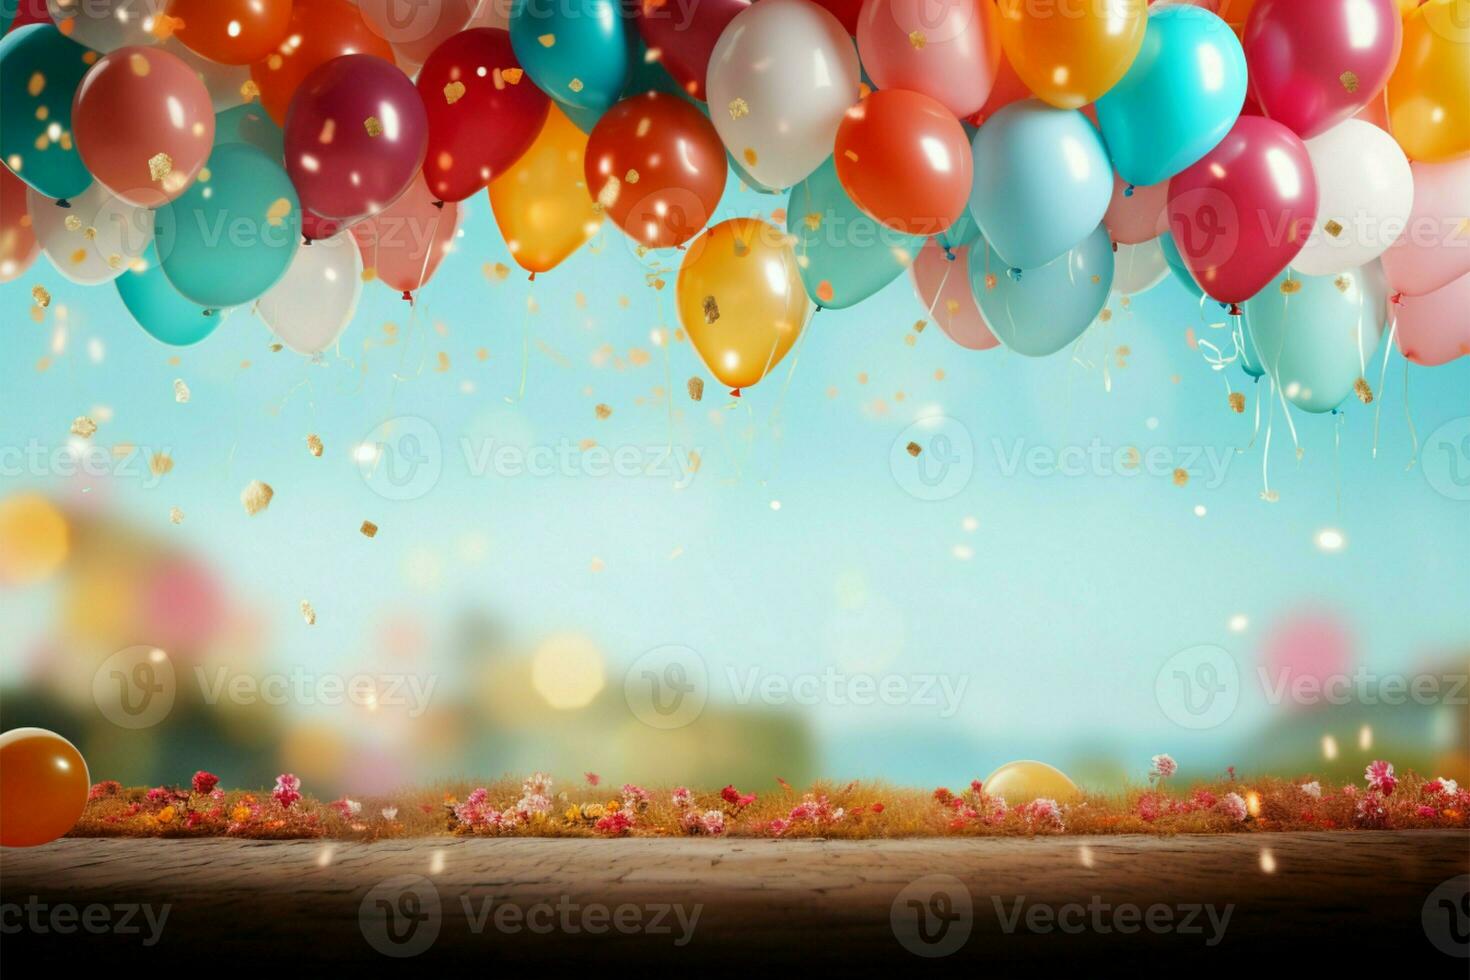 Vibrant balloons and textured confetti backdrop create a joyful display AI Generated photo